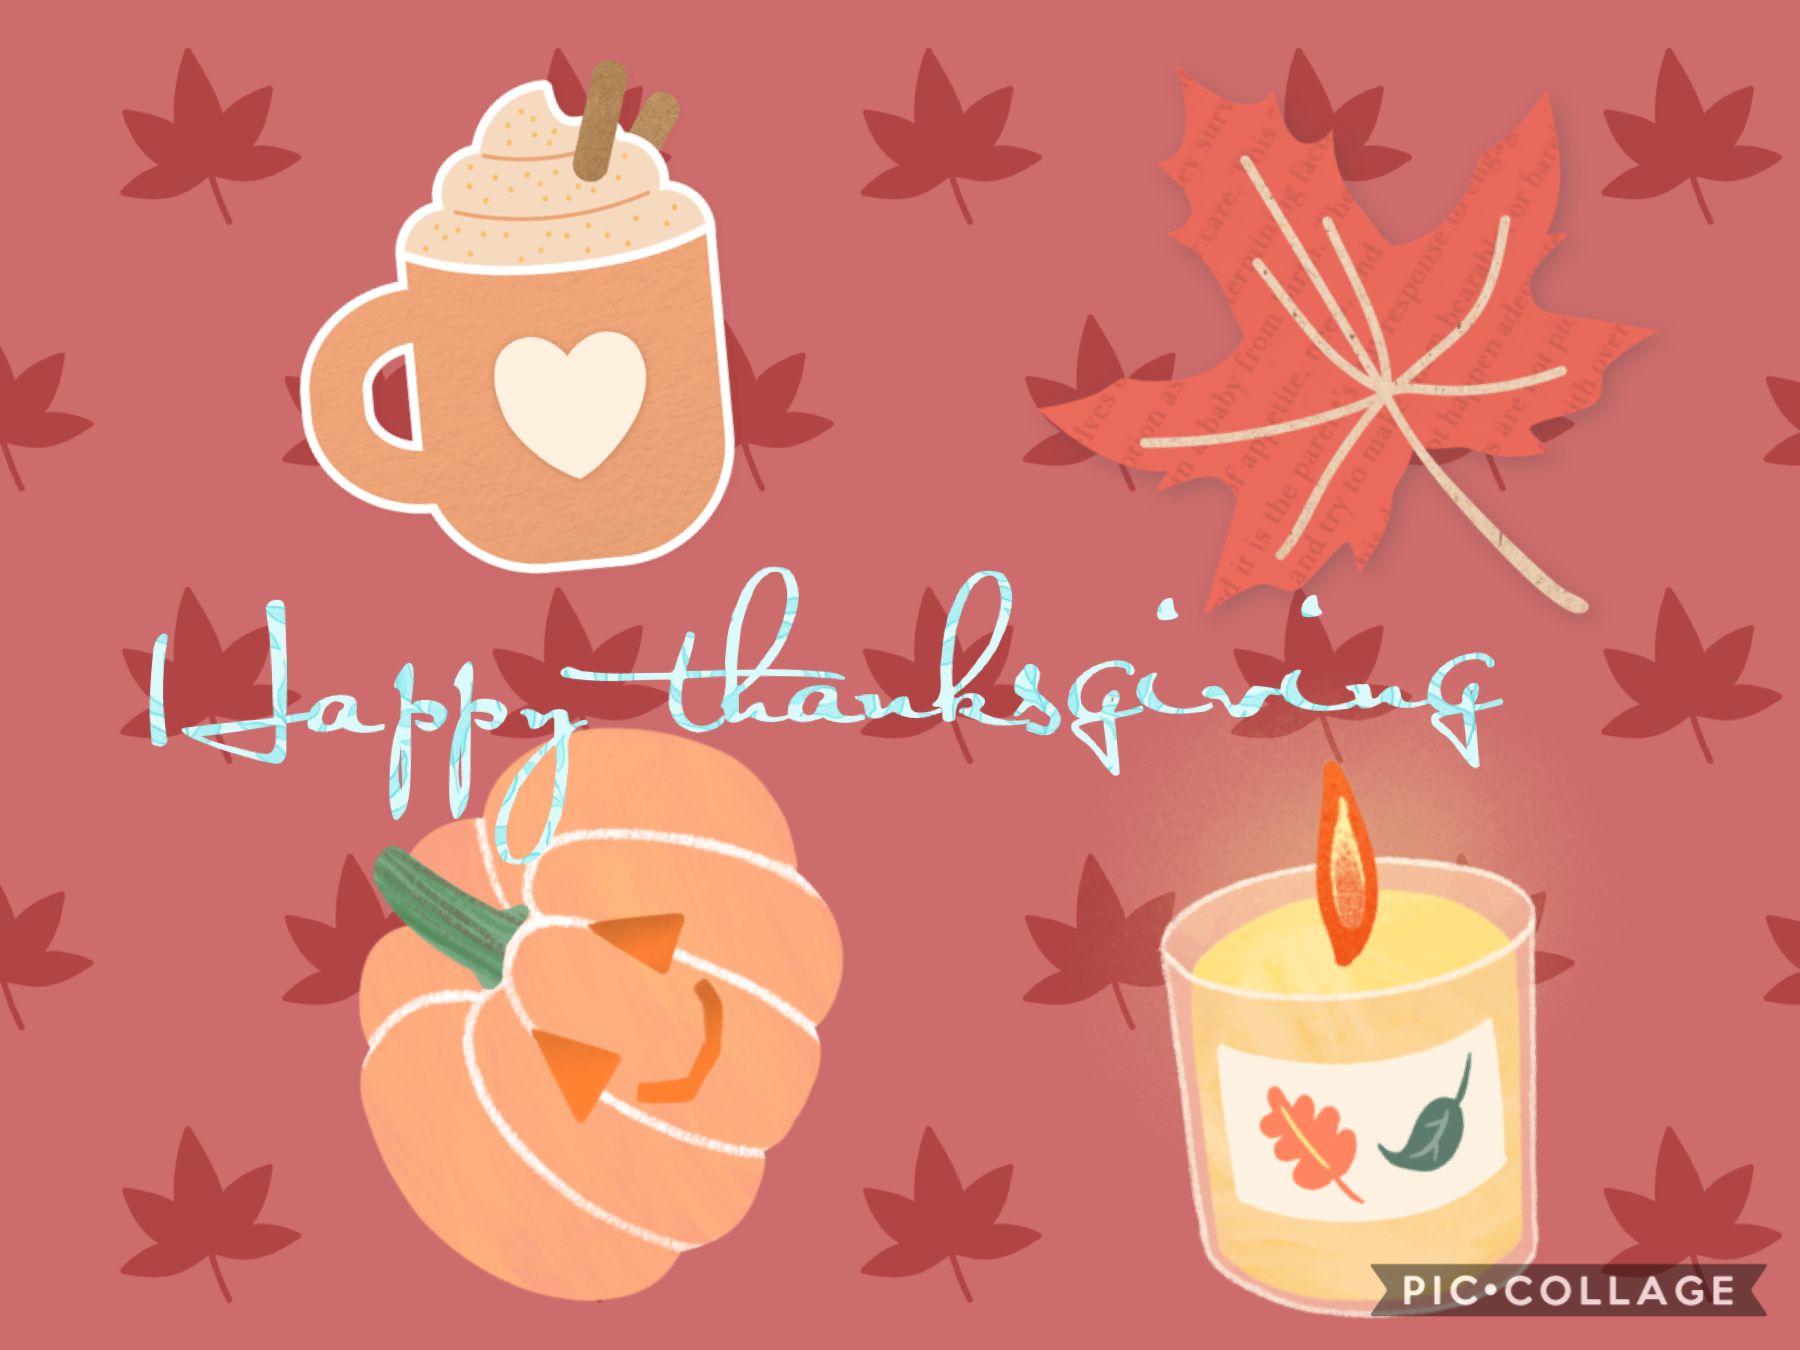 Happy thanksgiving 